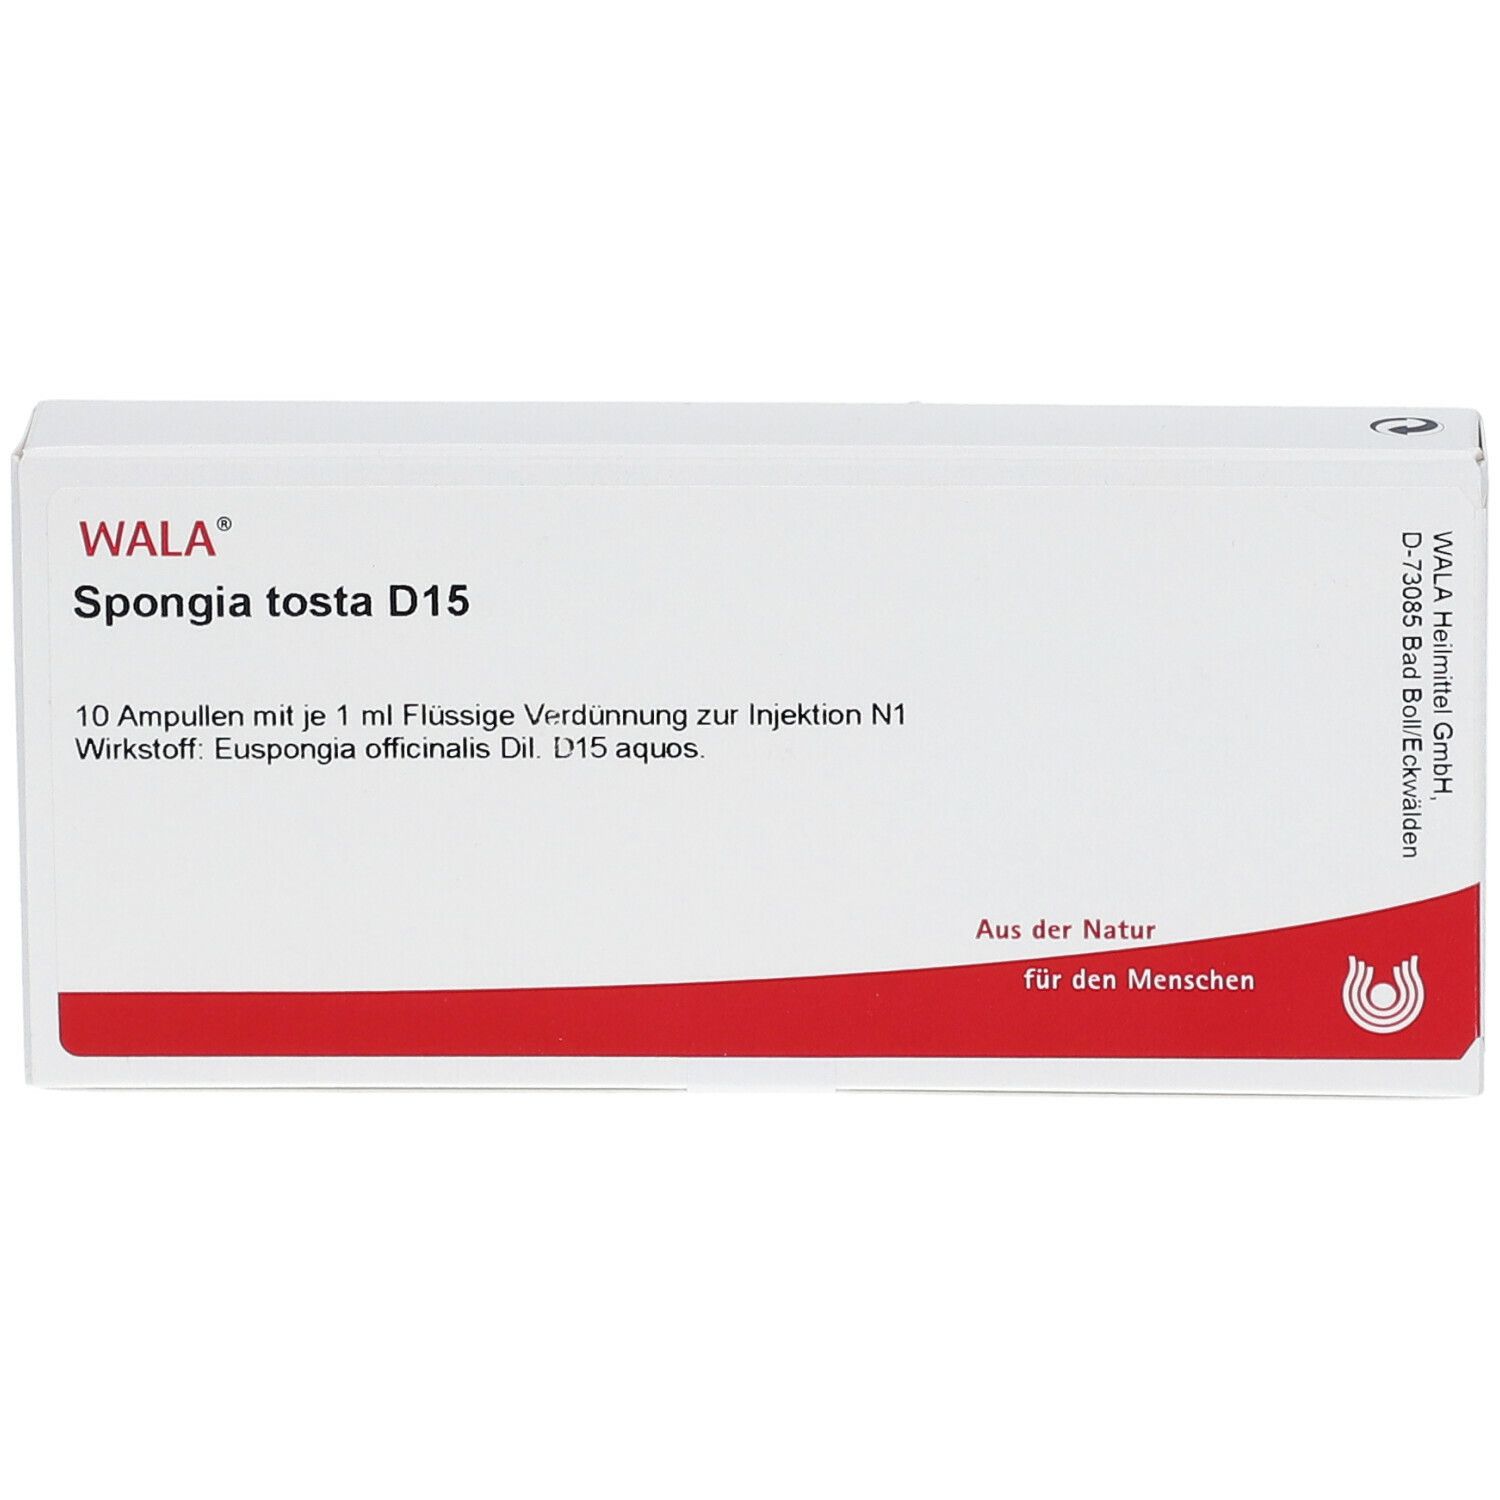 WALA® Spongia tosta D 15